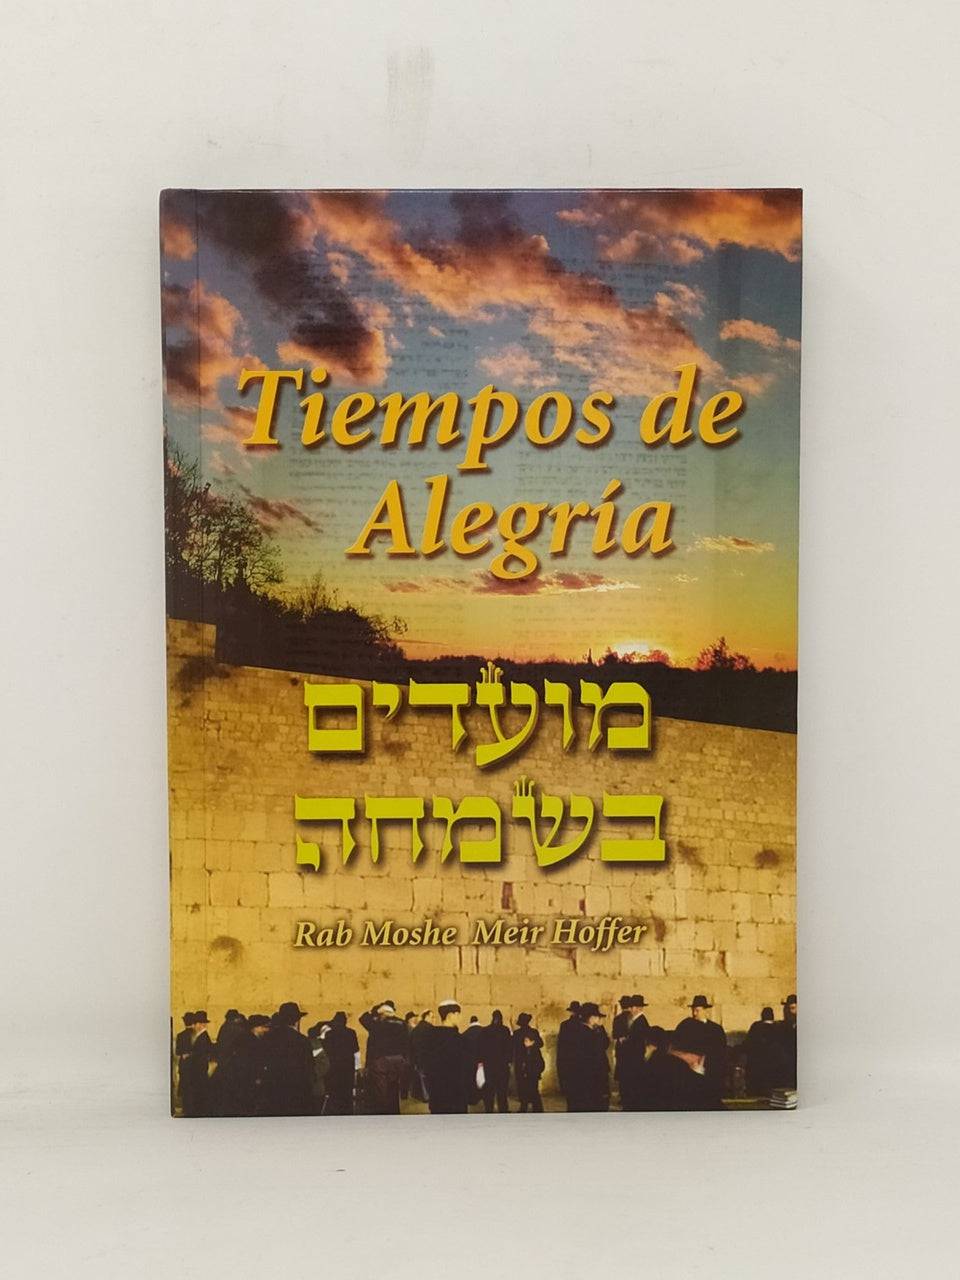 Tiempos De Alegria - Libreria Jerusalem Centro